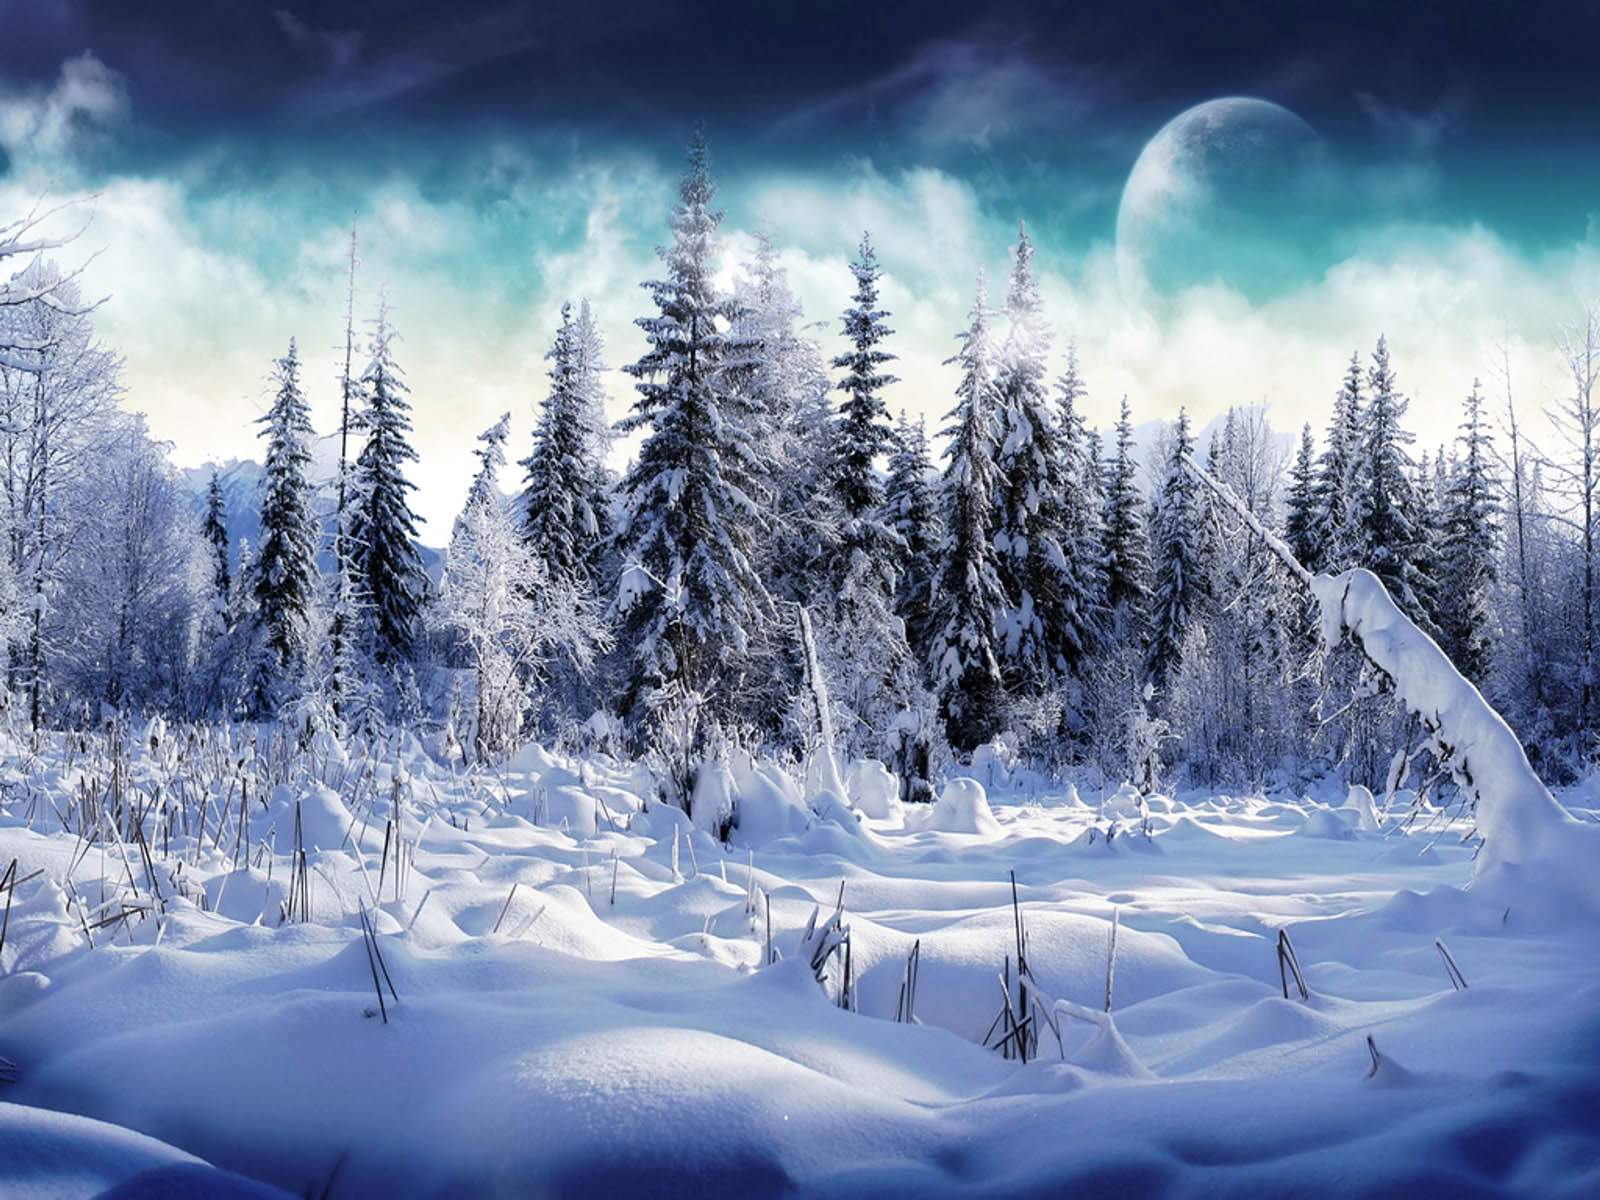 snowfall wallpaper hd,nature,winter,natural landscape,sky,snow